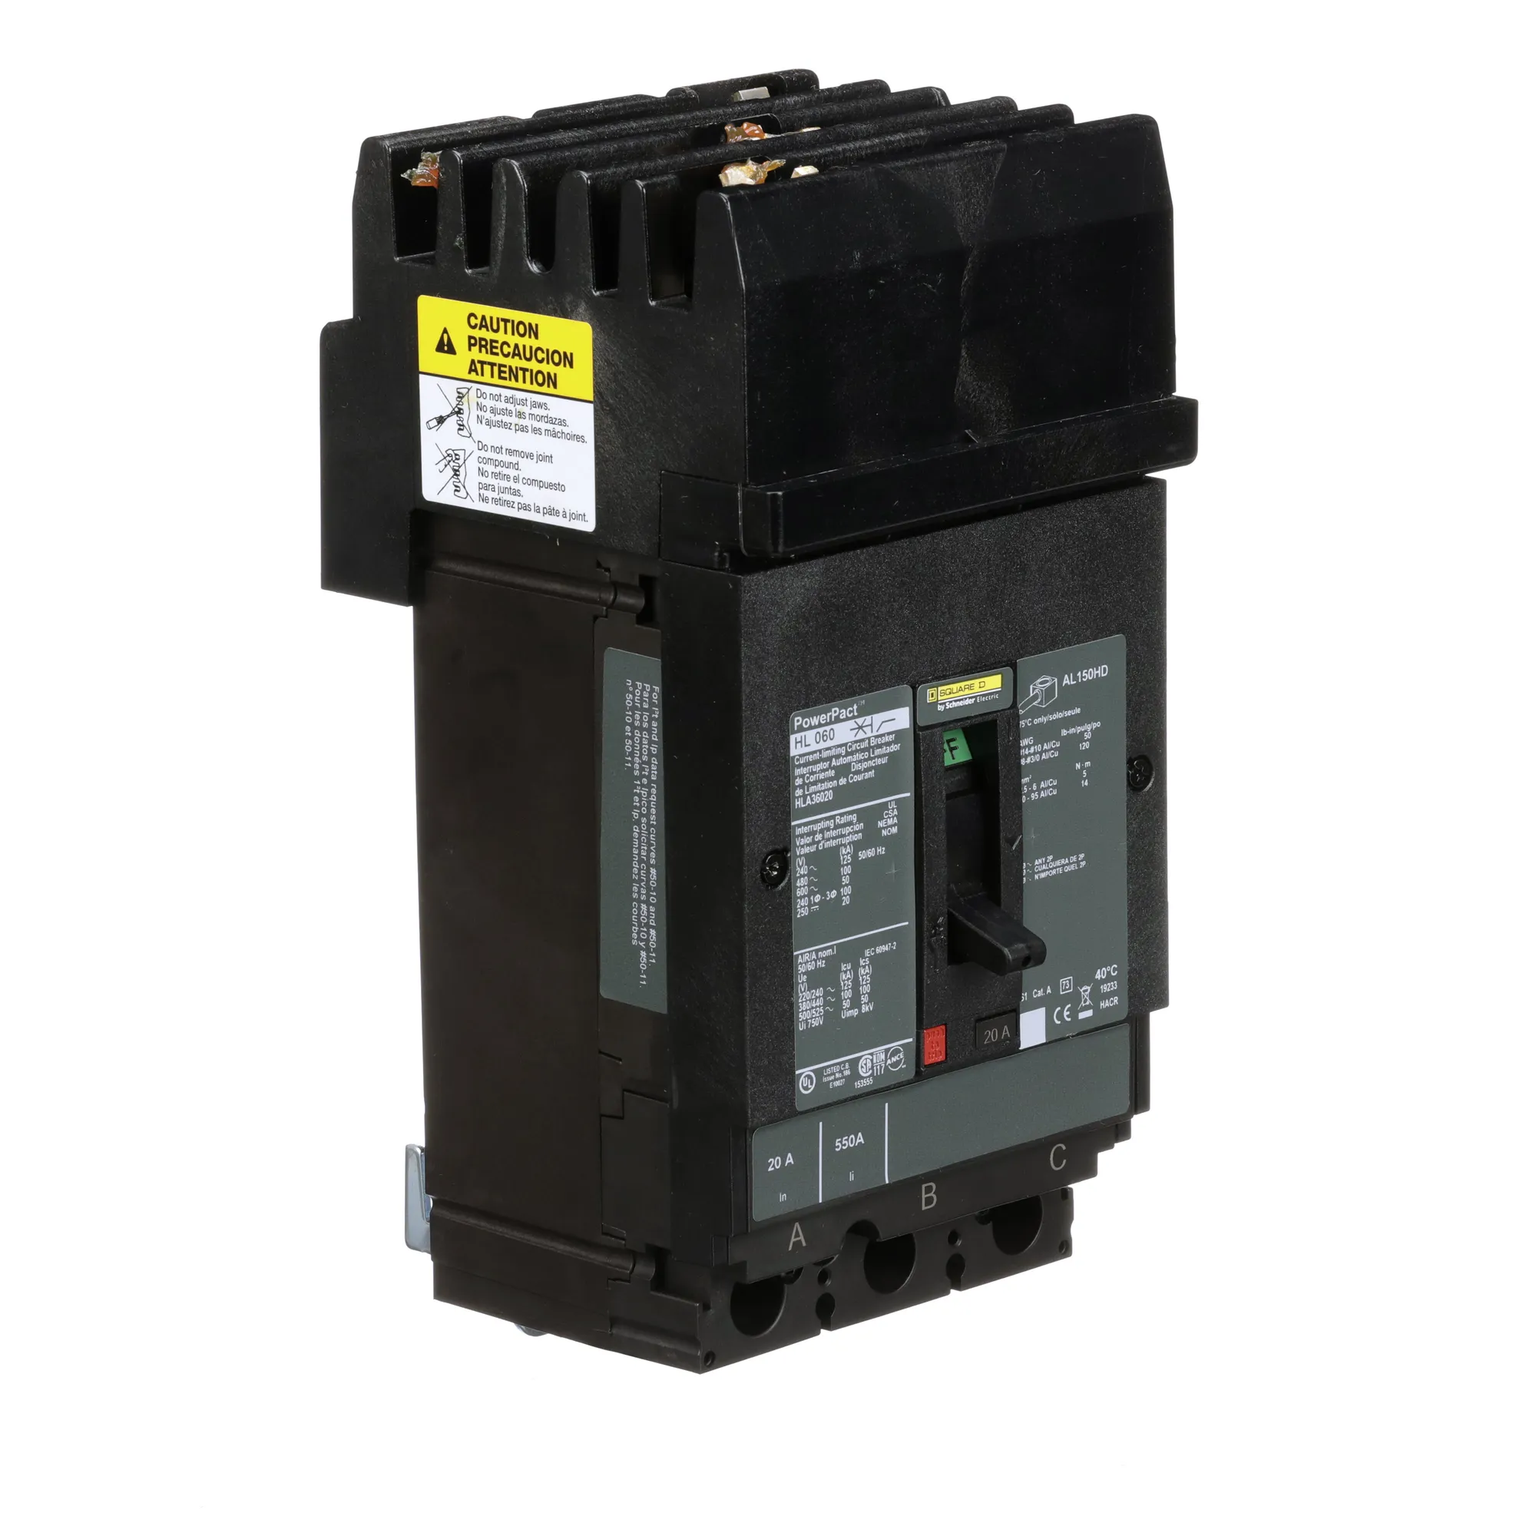 HLA36020 - Square D - Molded Case Circuit Breaker